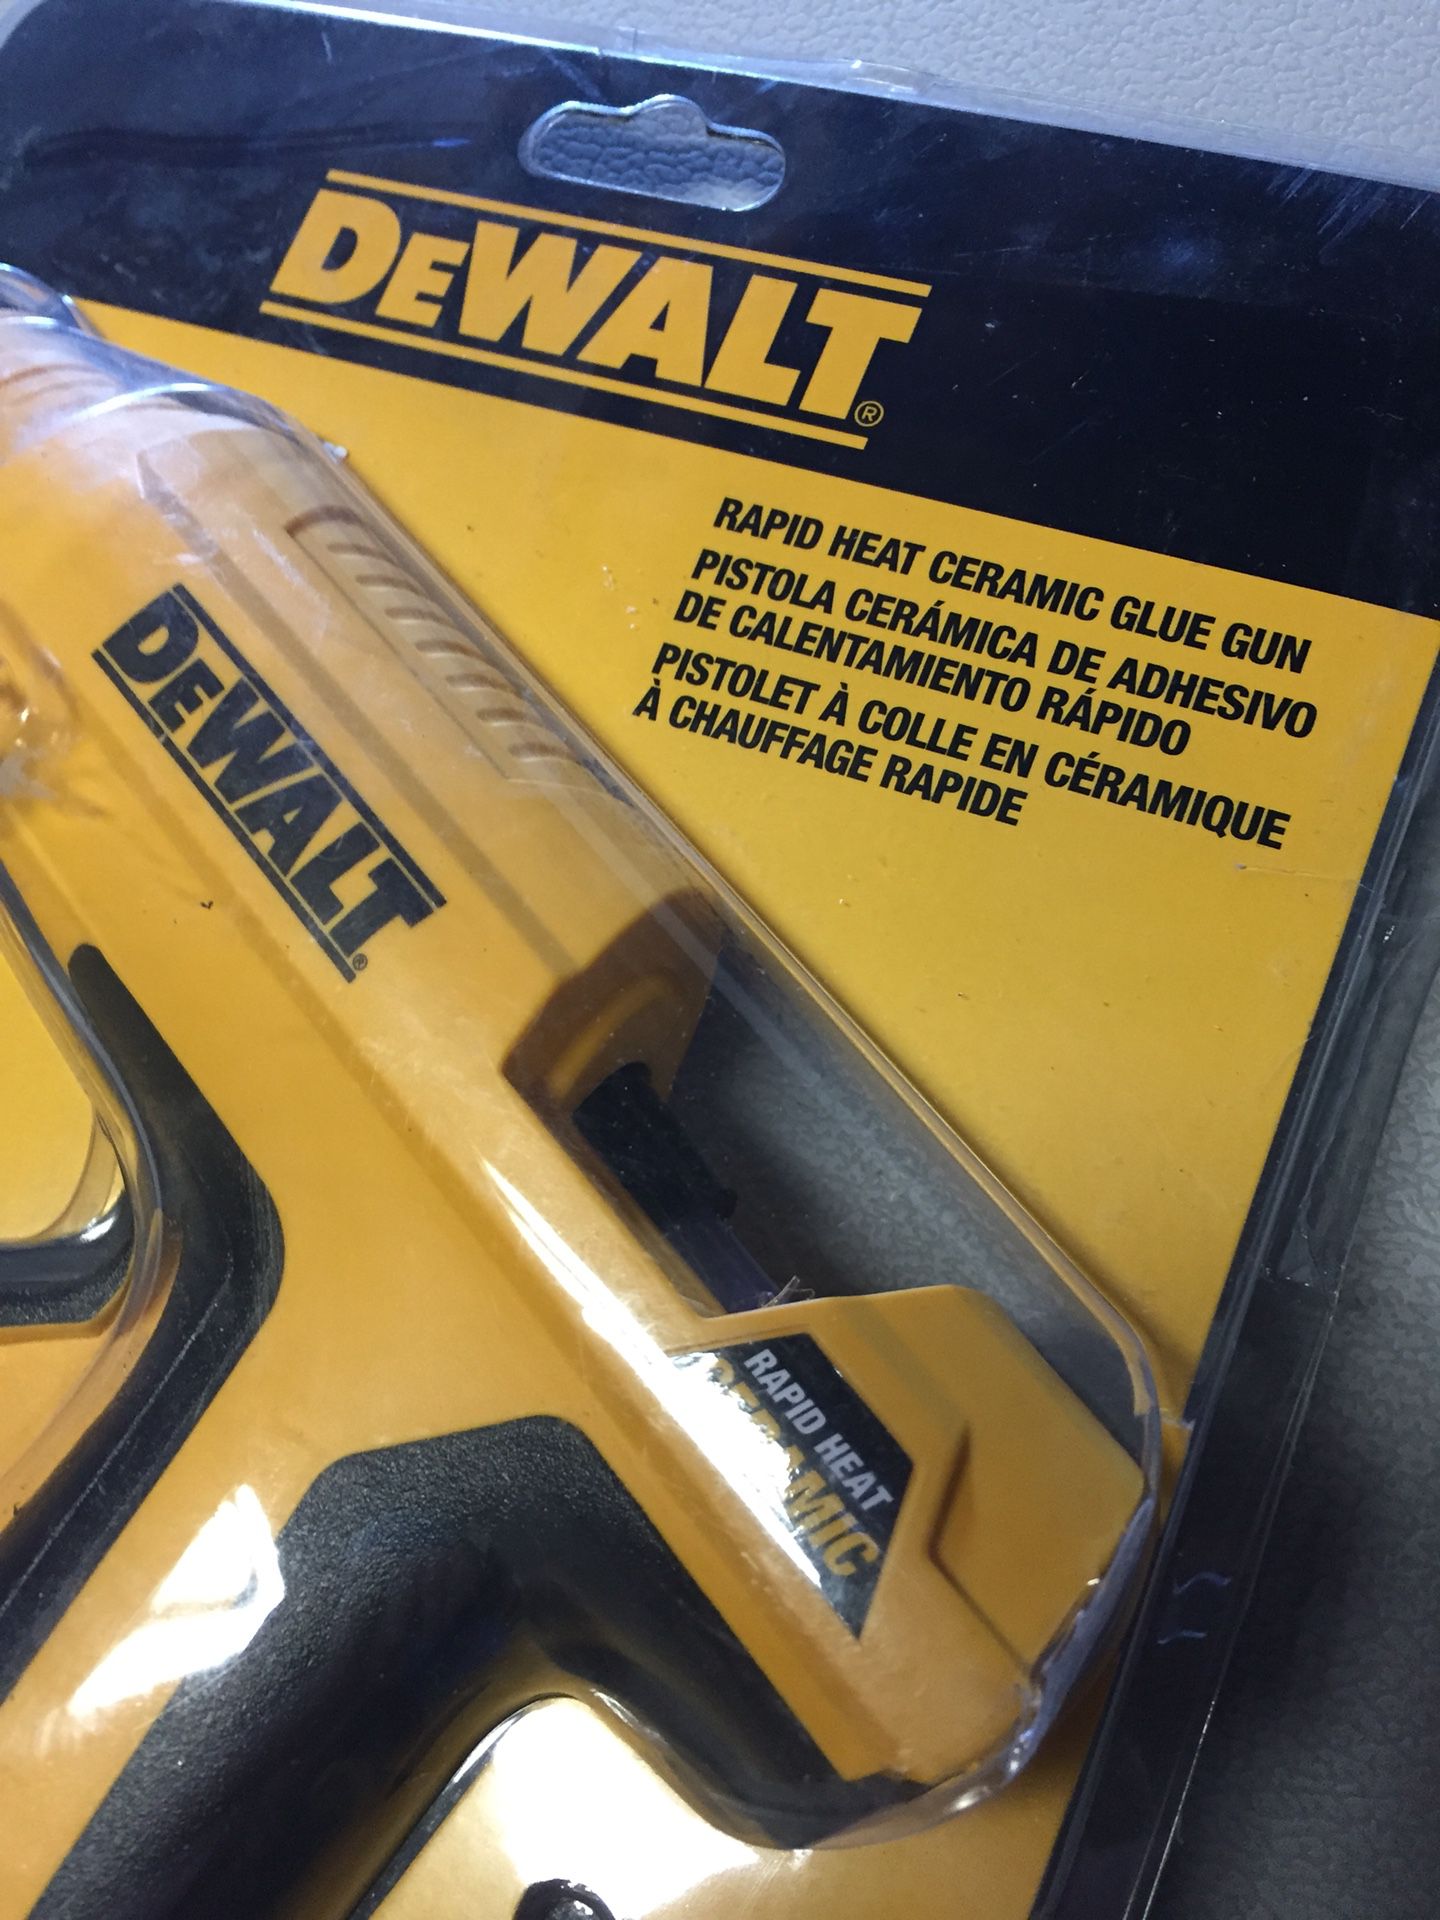 DeWALT Rapid Heat Ceramic Glue Gun - Yellow